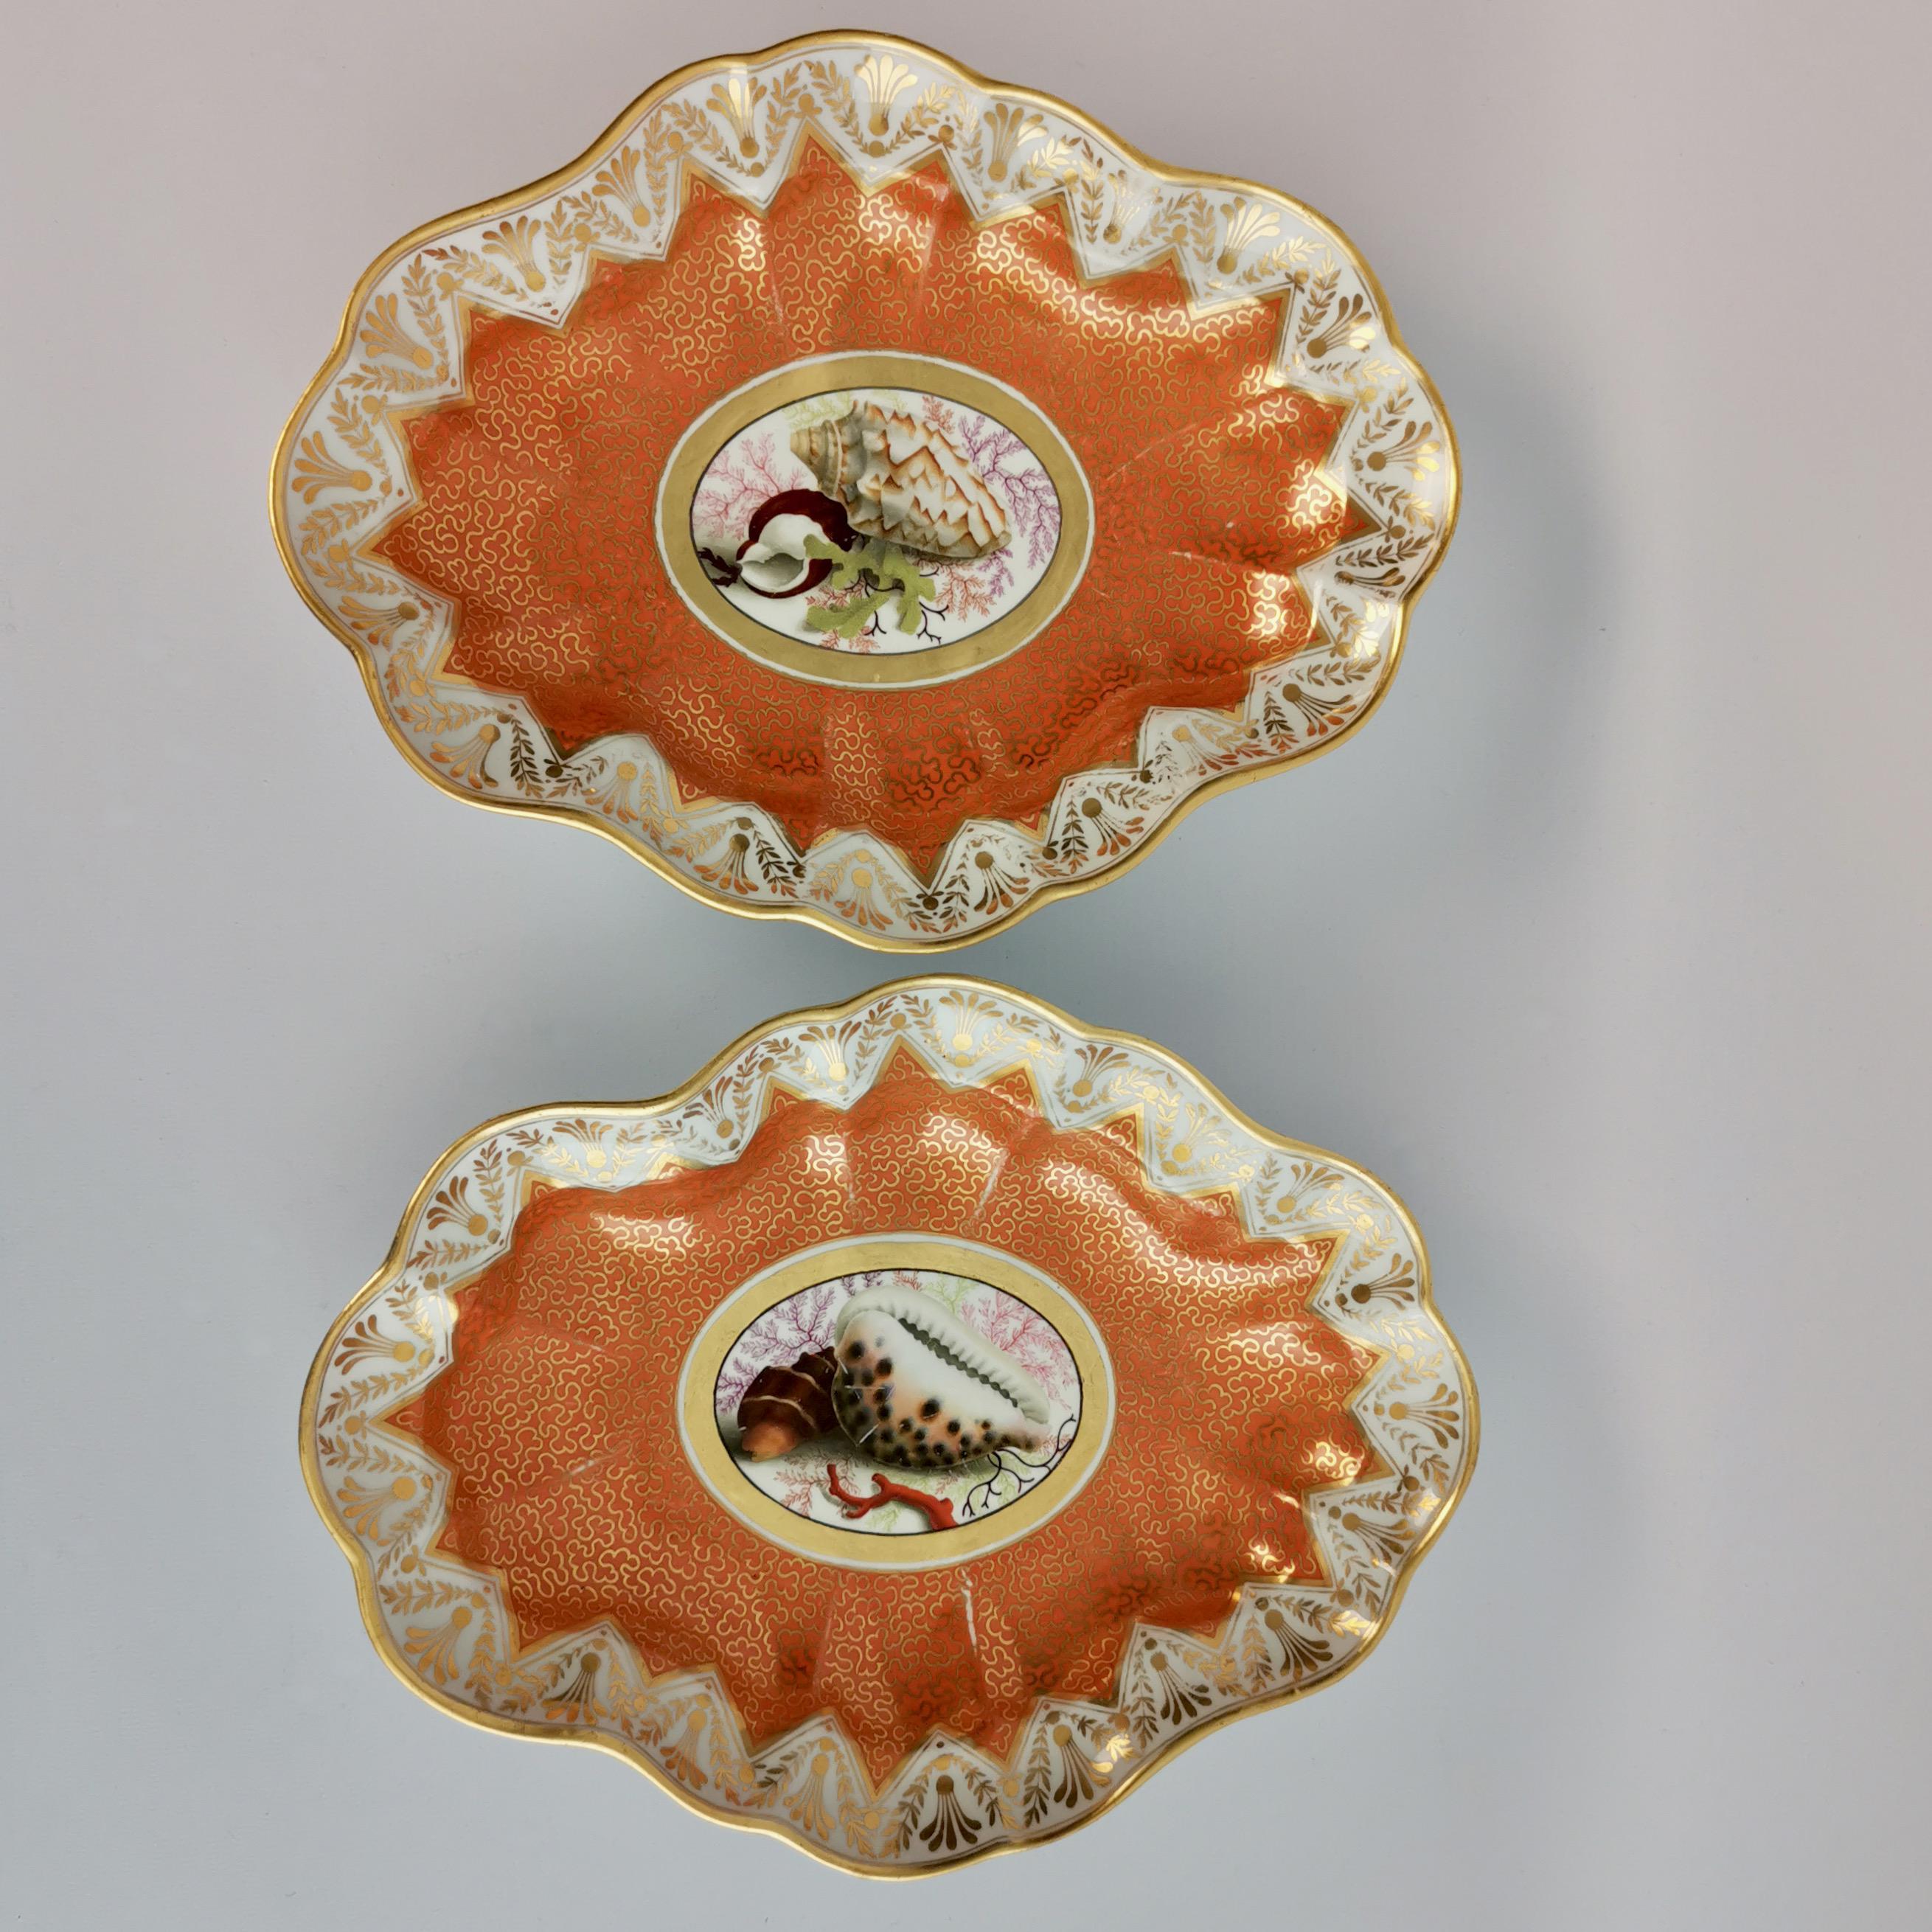 English Chamberlains Worcester Porcelain Dessert Service, Orange, Regency, circa 1815